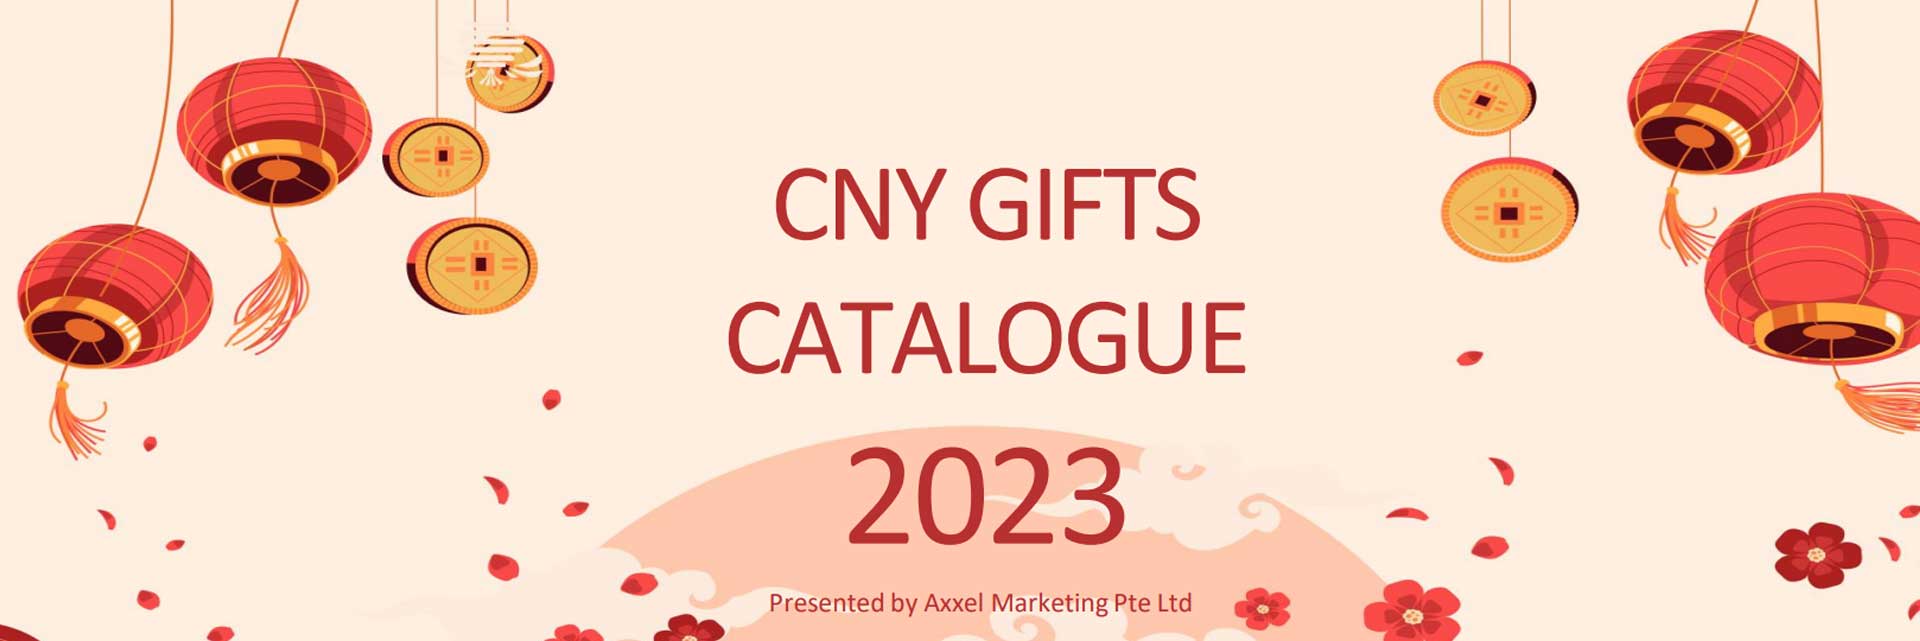 Axxel_CNY_Gift_Catalogue_2023_banner.jpg